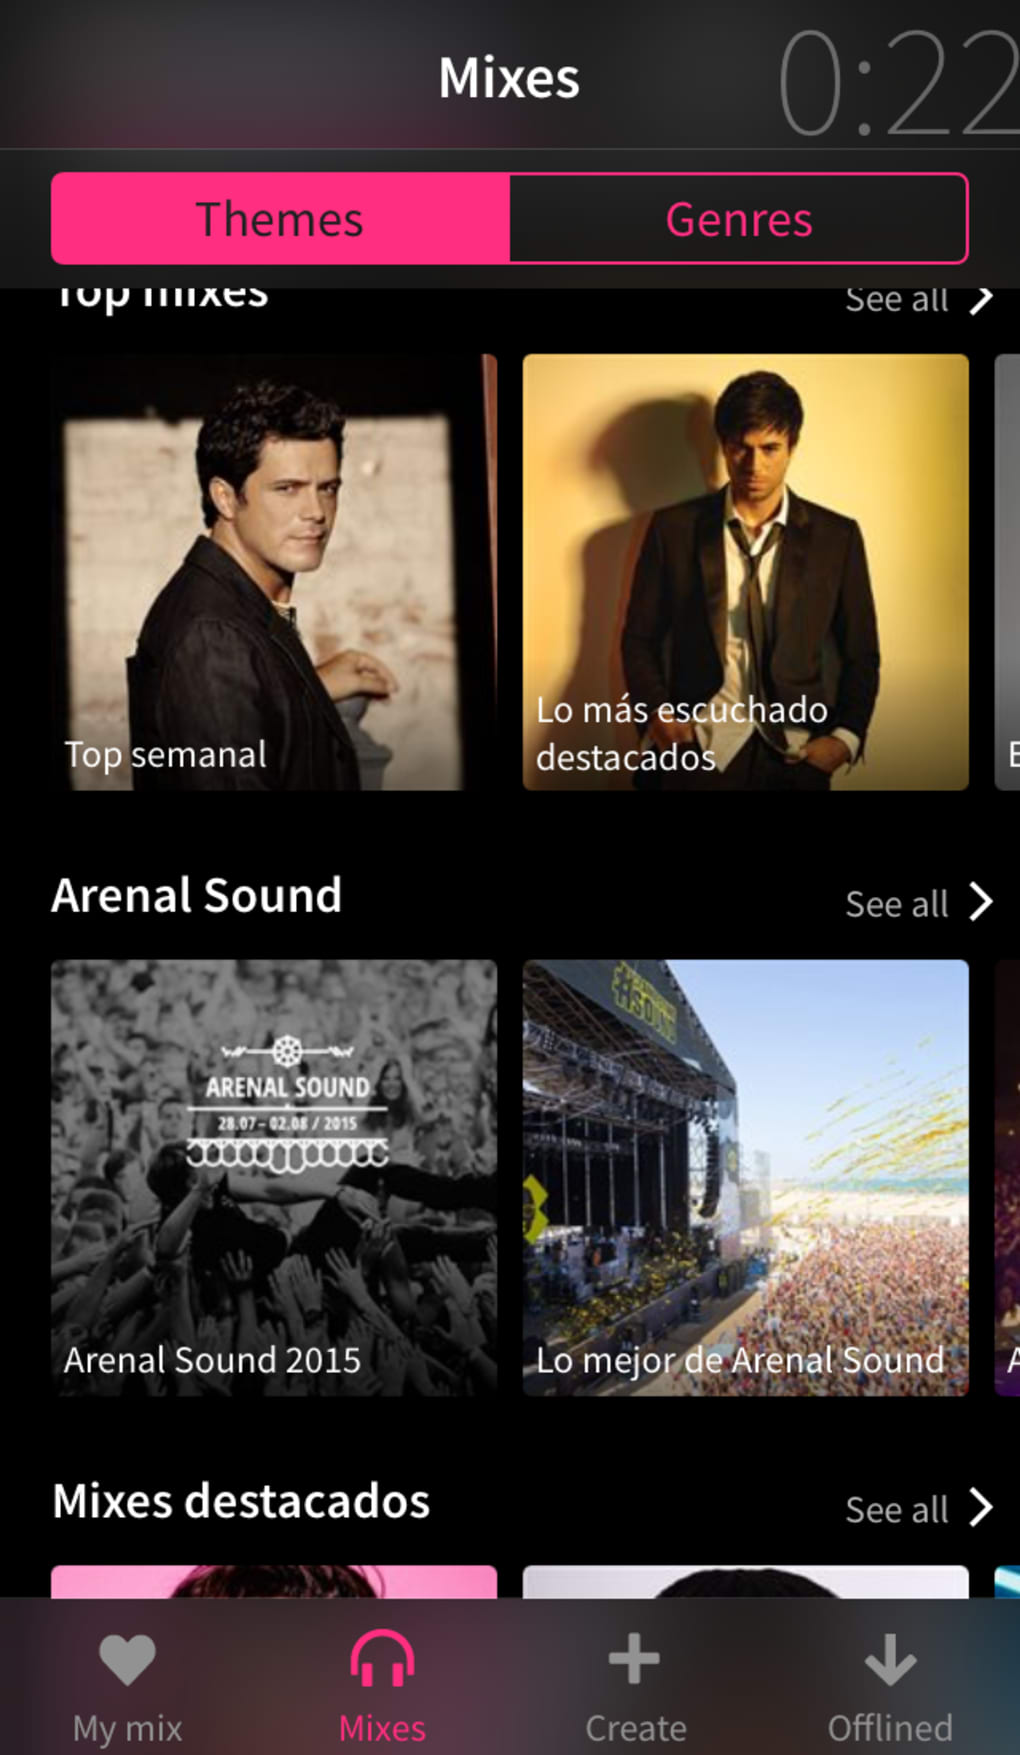 RVA Mix Radio - Apps on Google Play